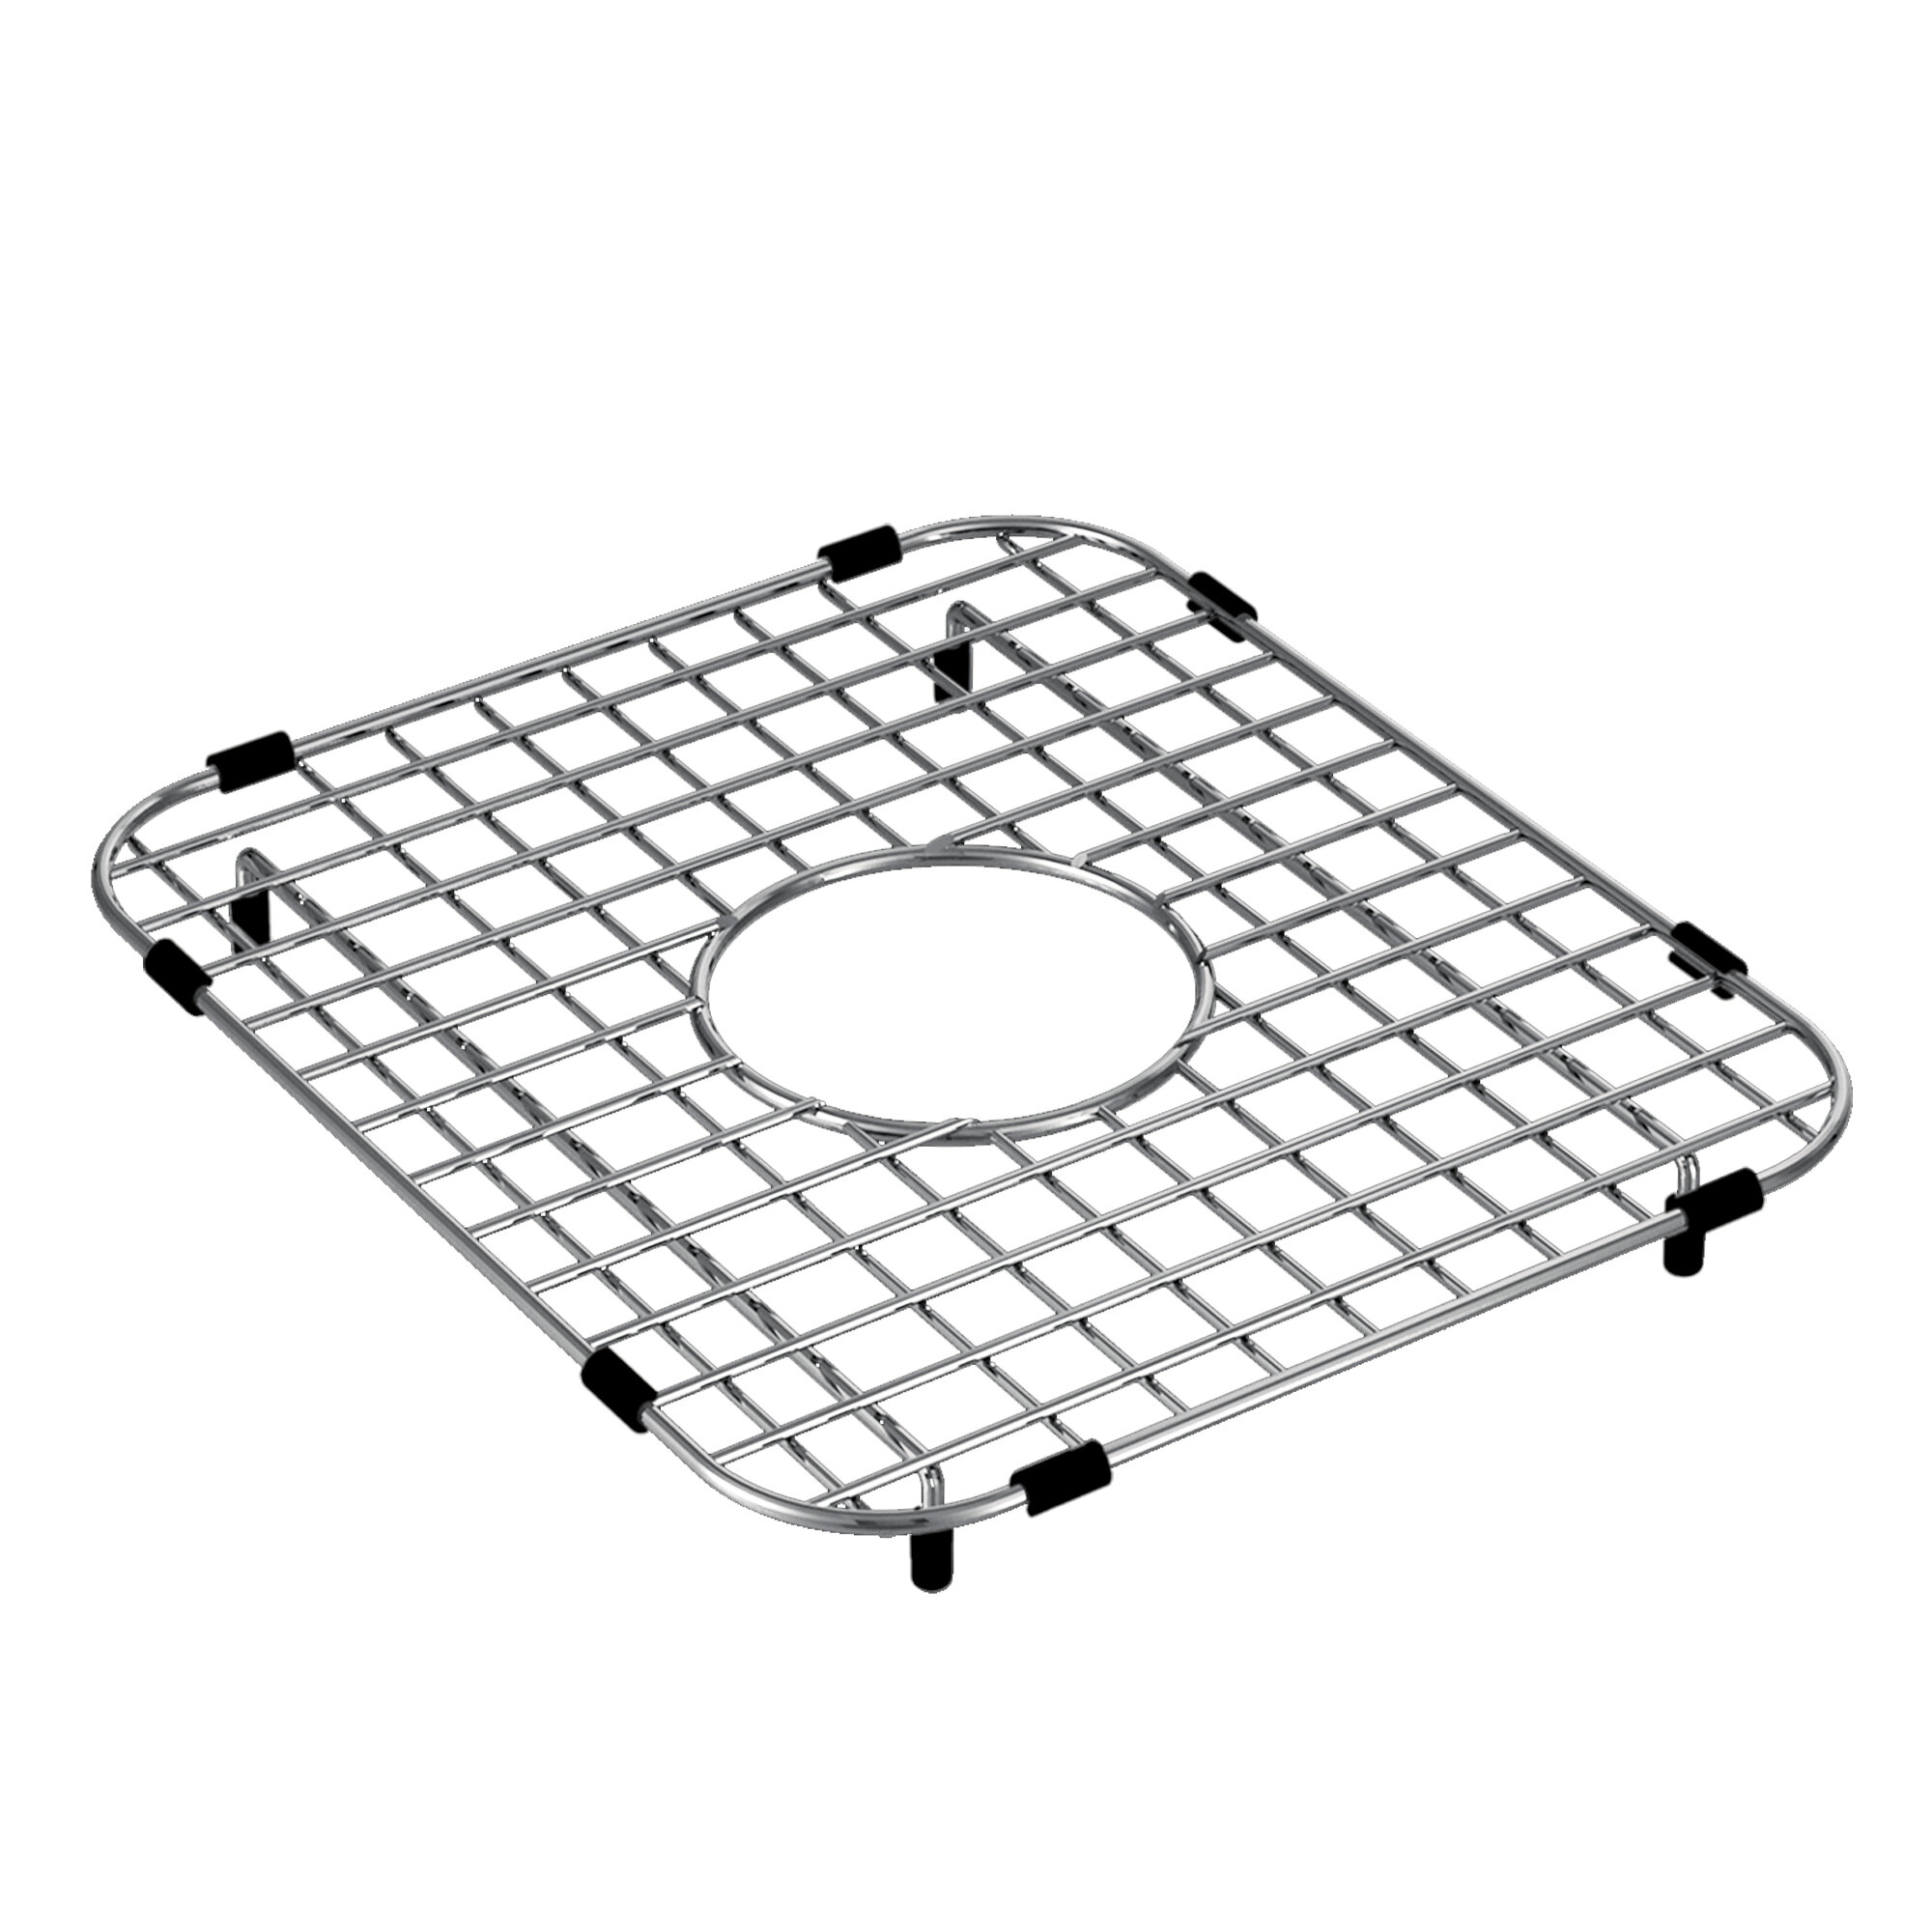  ExcelSteel Rectangular Stainless Steel Basket, 14.75